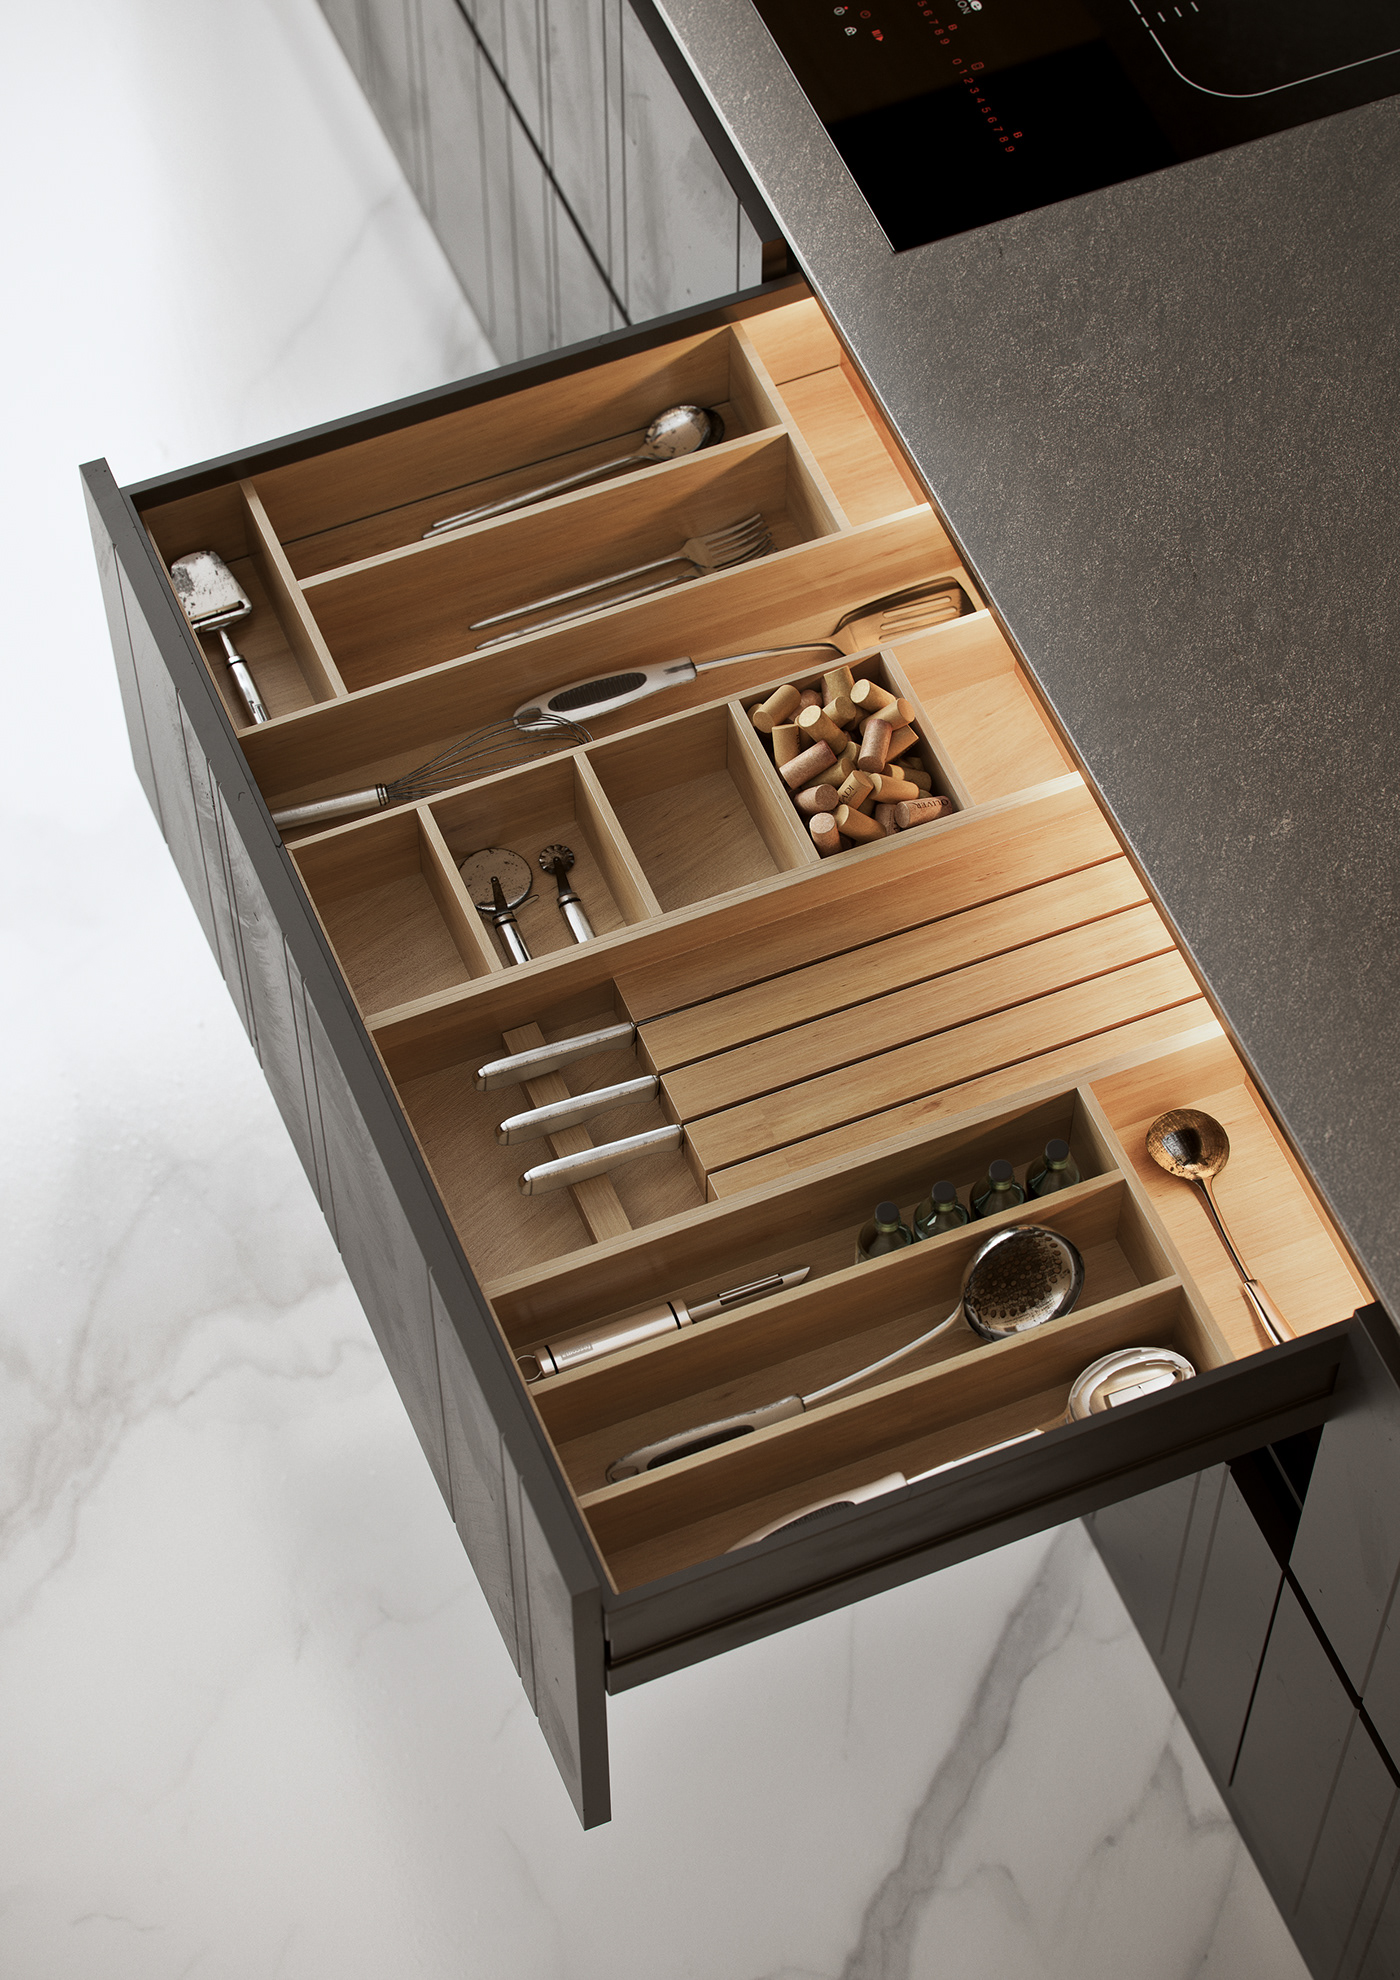 corona kitchen 3d max design furniture